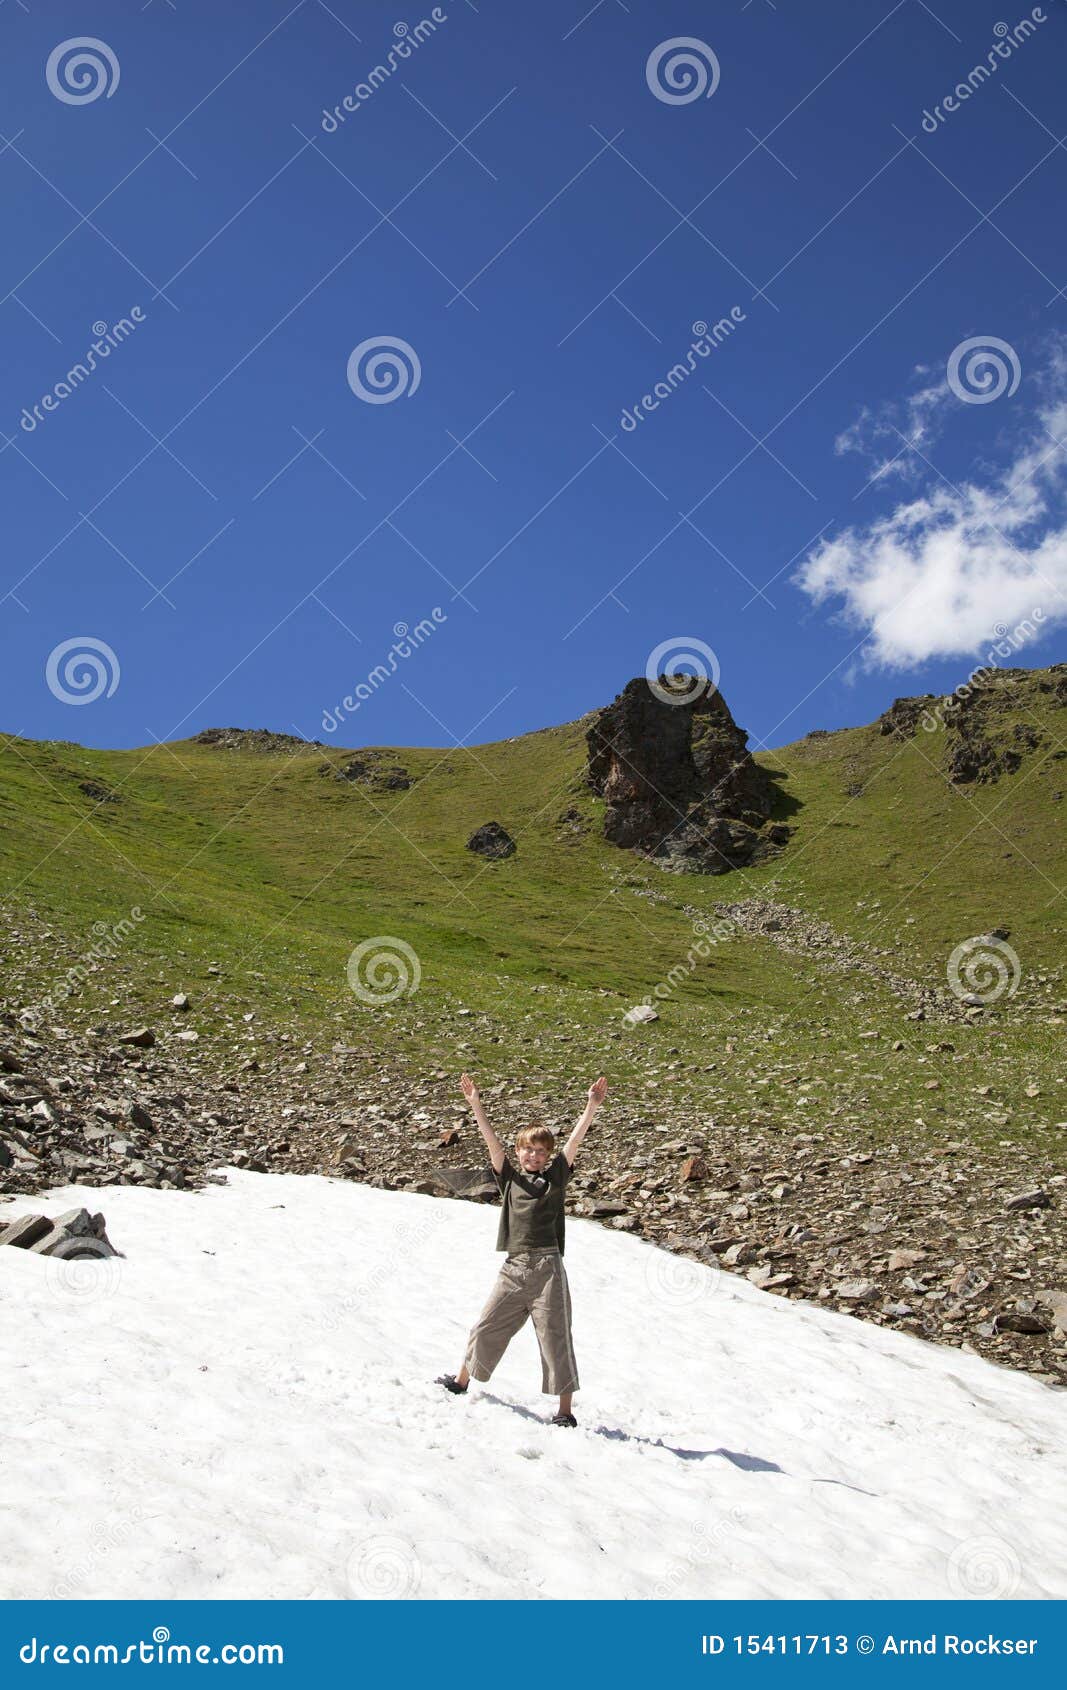 cheering boy in a snowfield